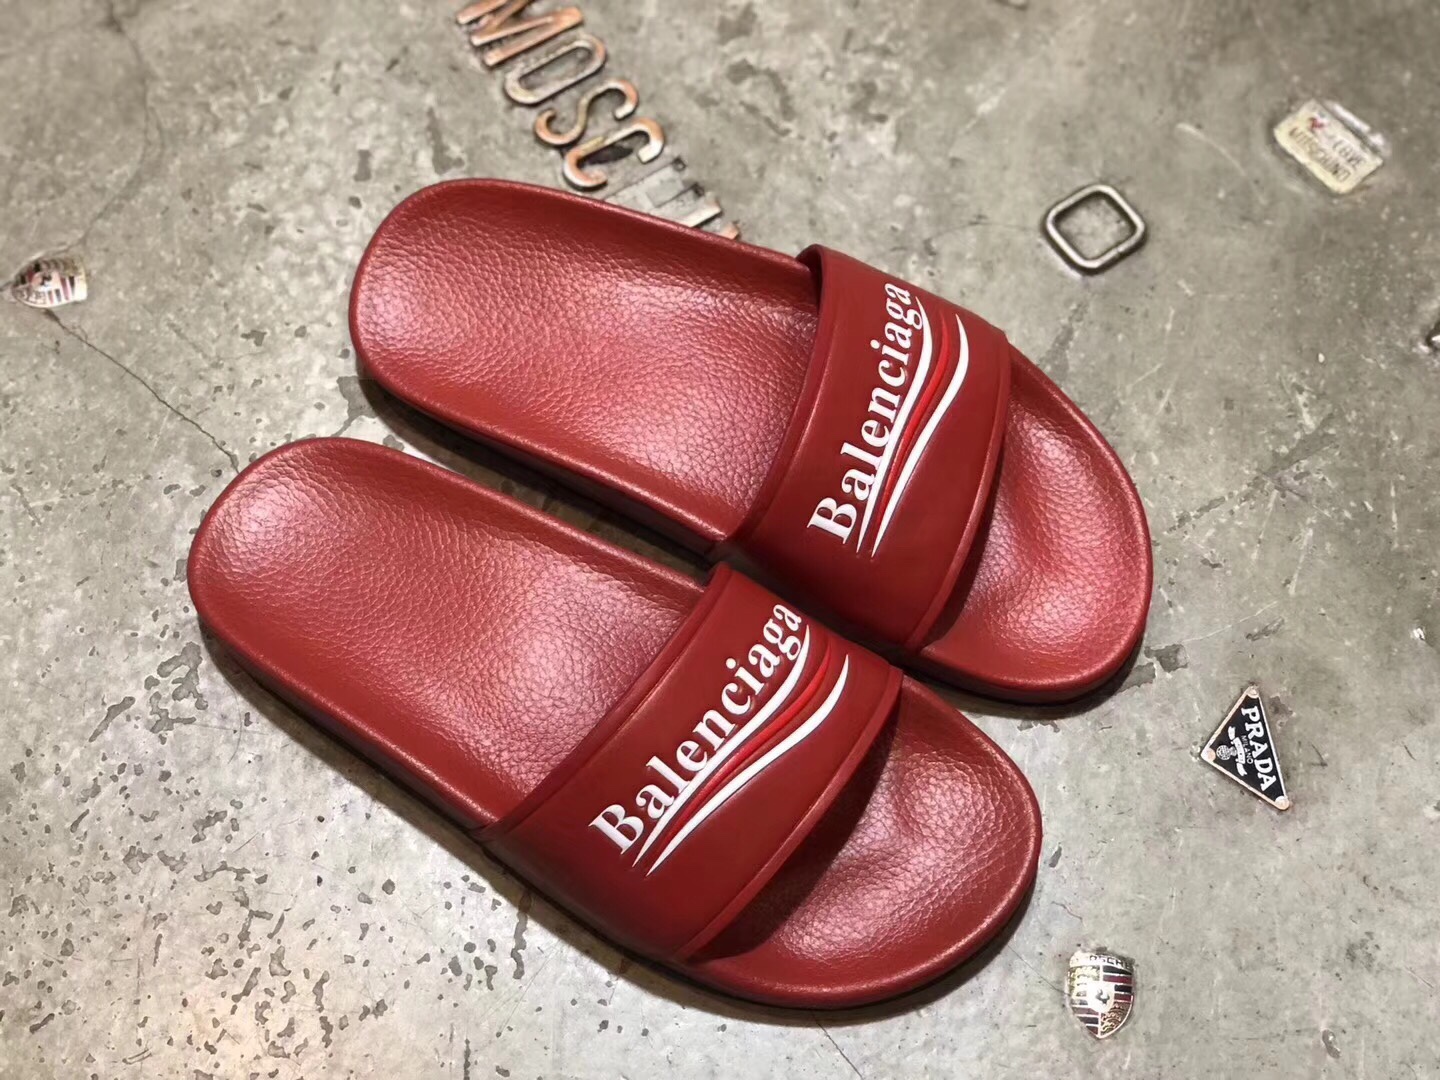 High Quality Balenciaga slide sandal BL008